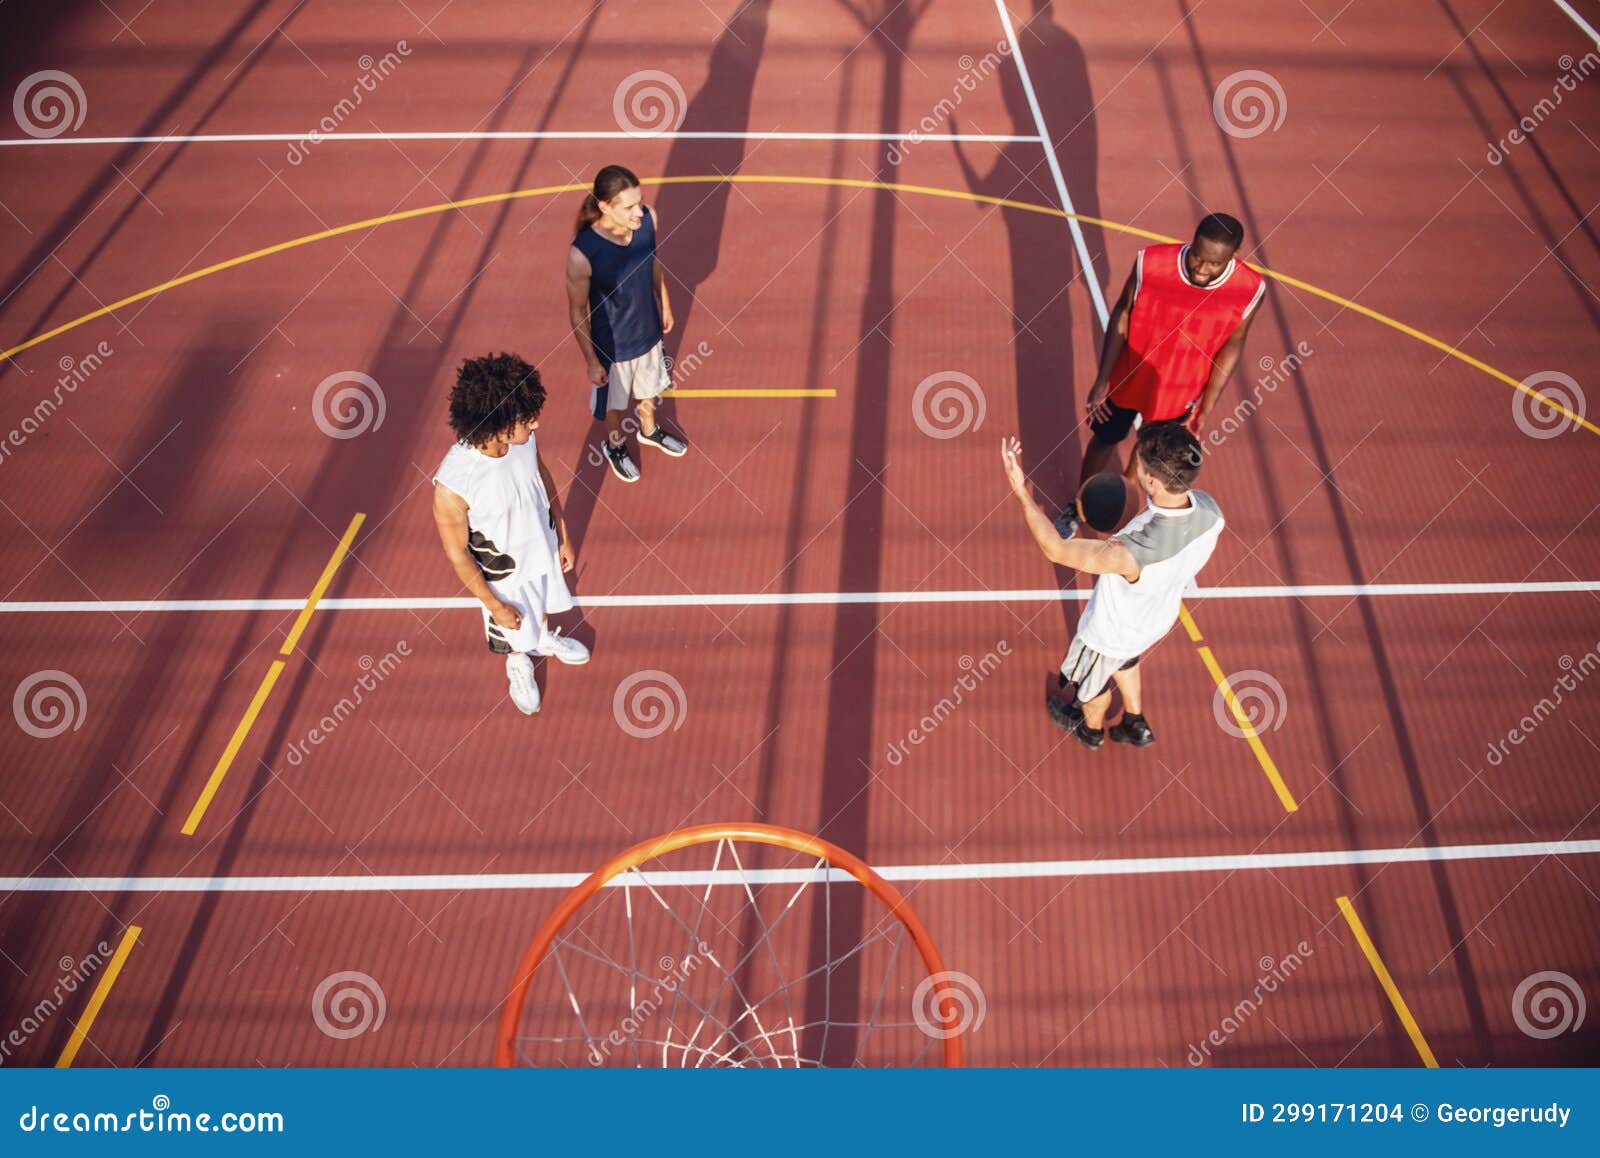 Guys playing basketball stock photo. Image of male, american - 299171204